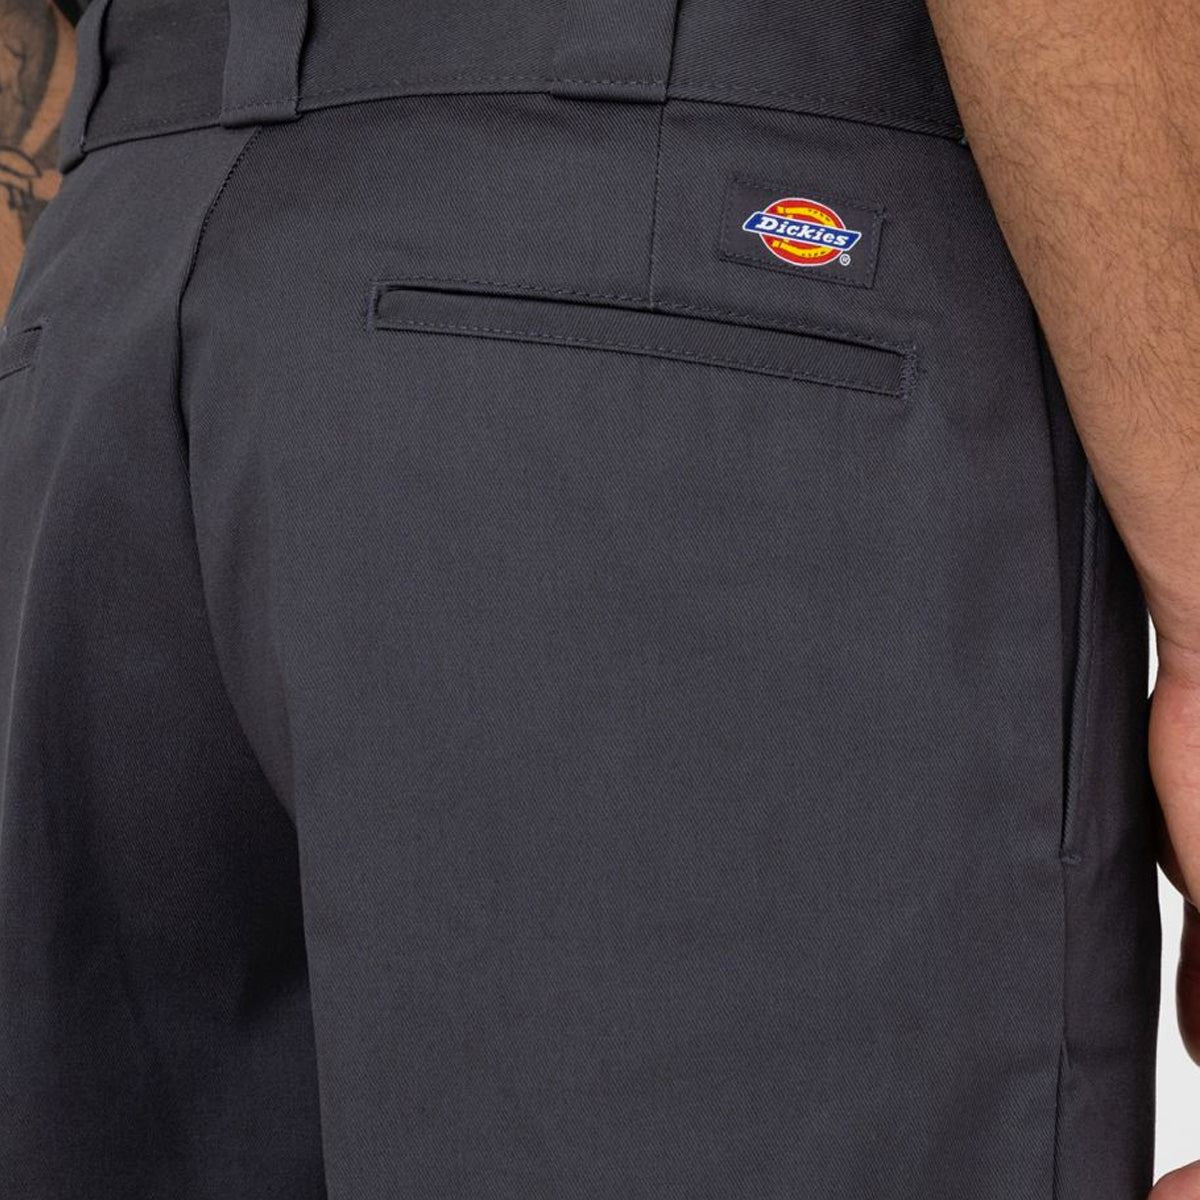 Dickies 874 Original Fit Work Pants Recycled Charcoal Grey